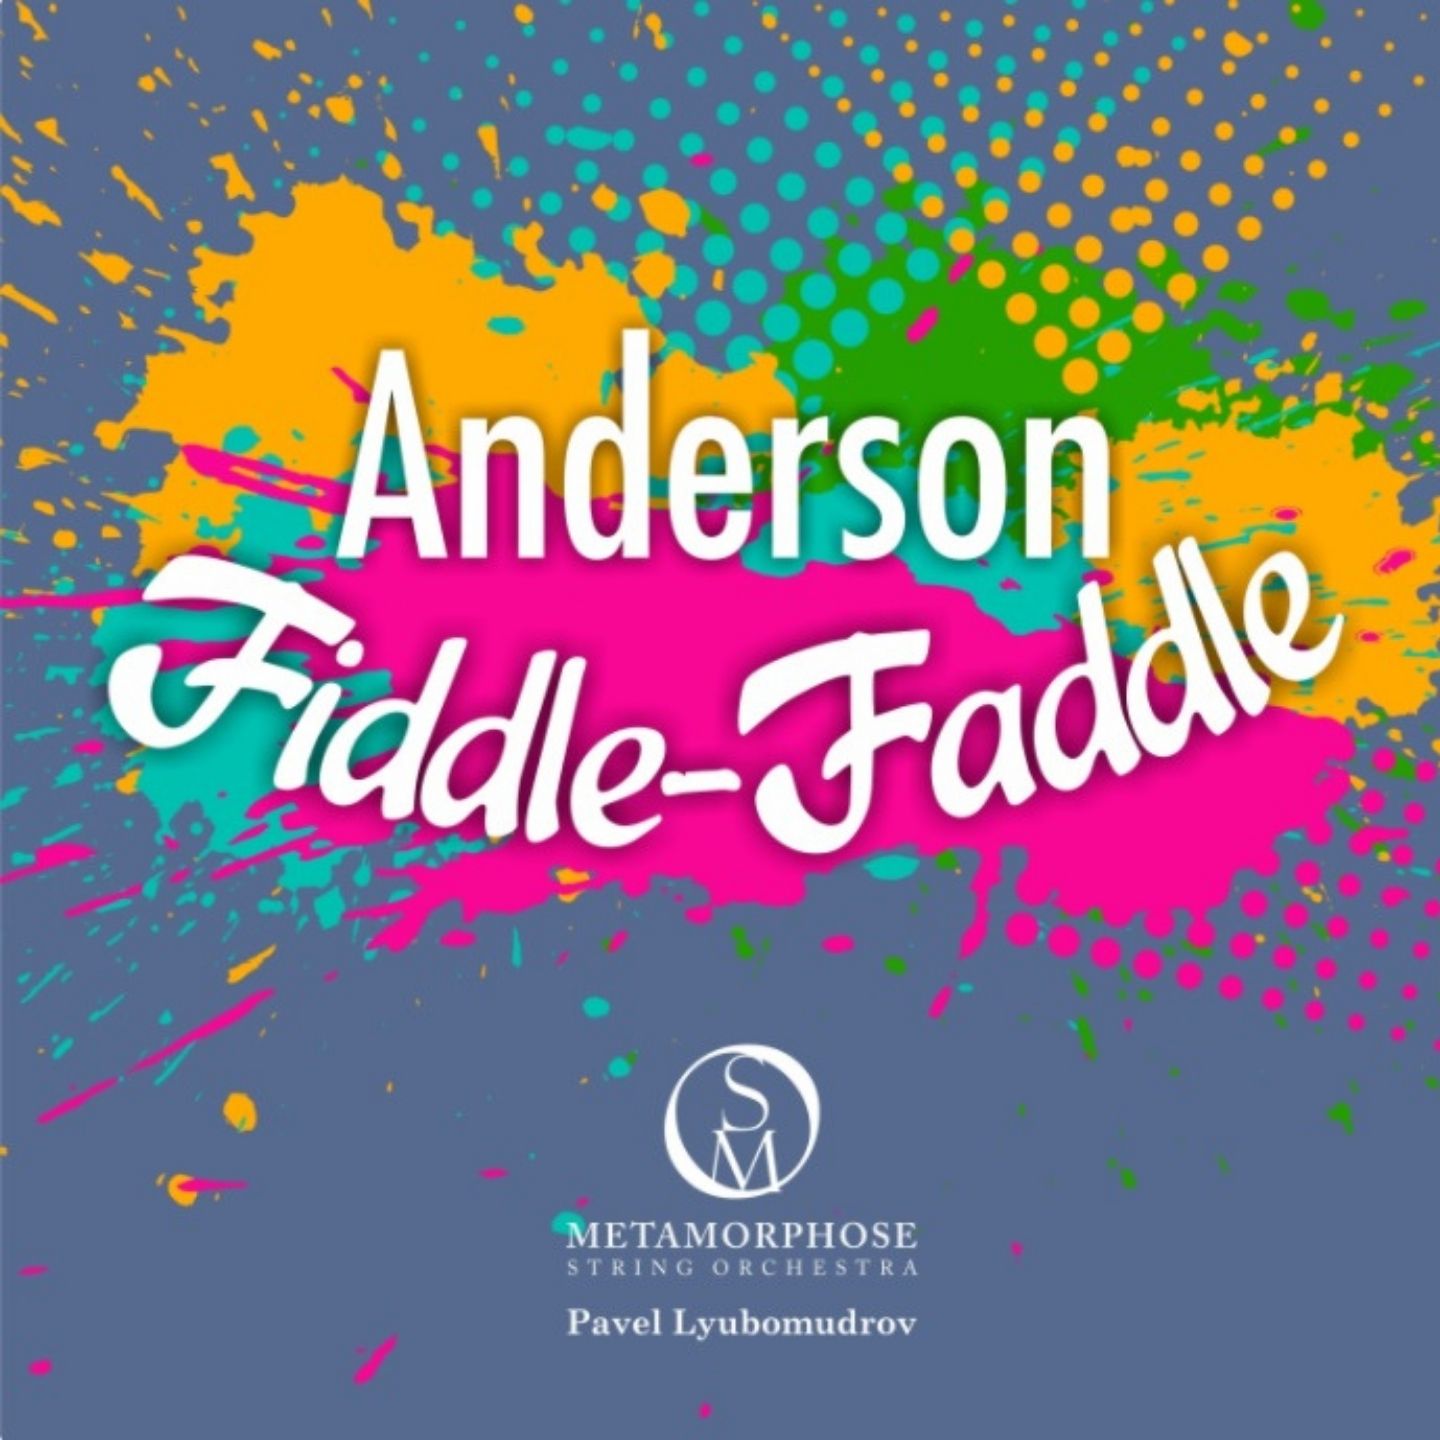 Fiddle Faddle